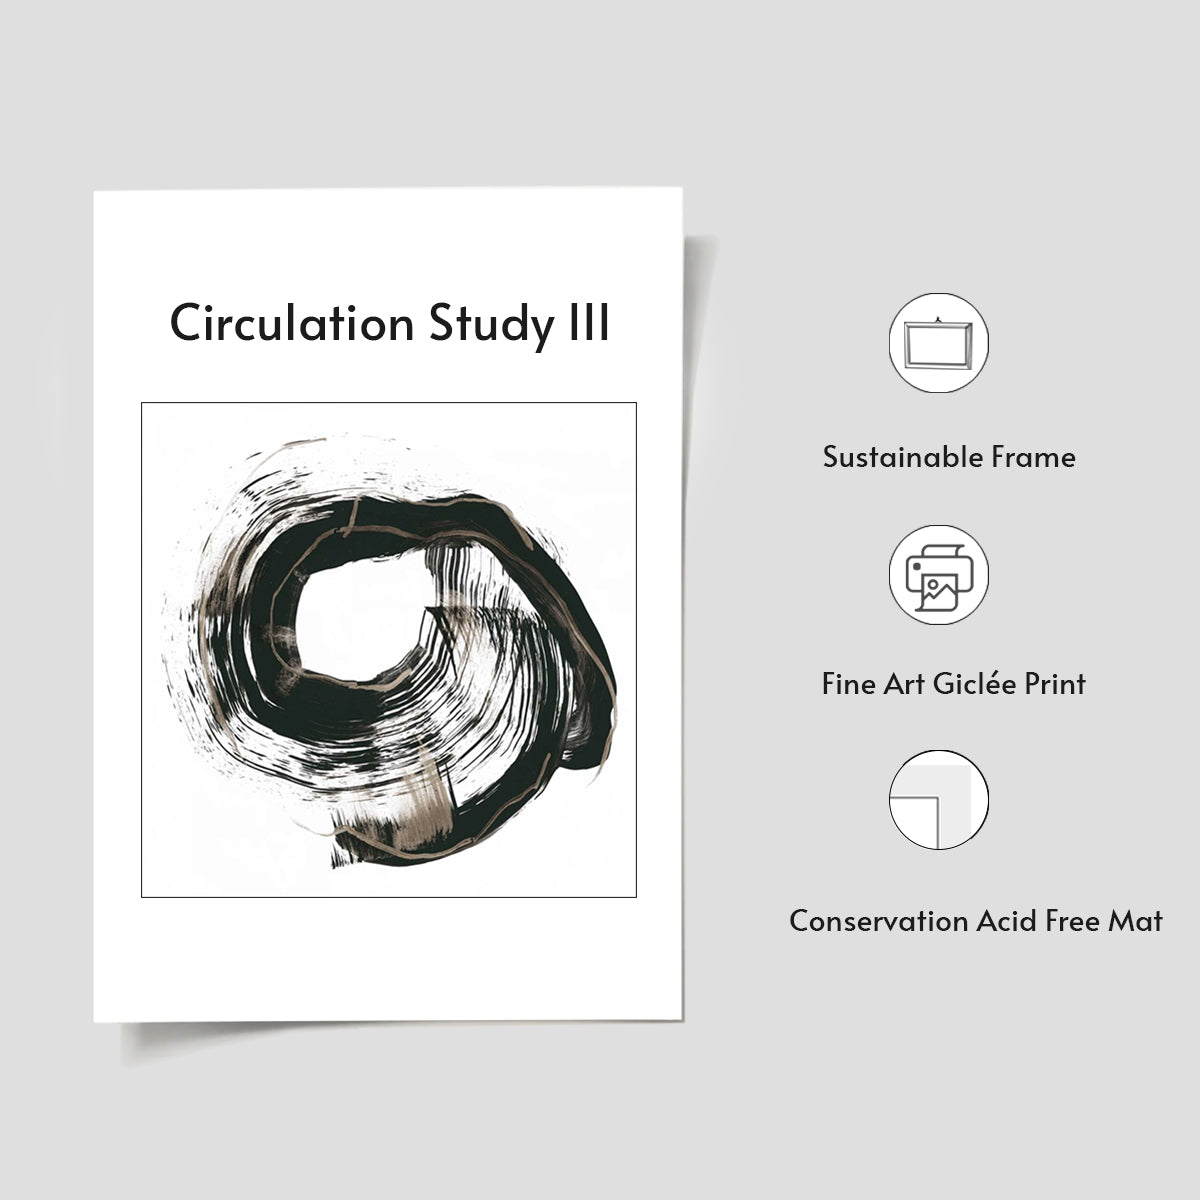 Circulation Study III